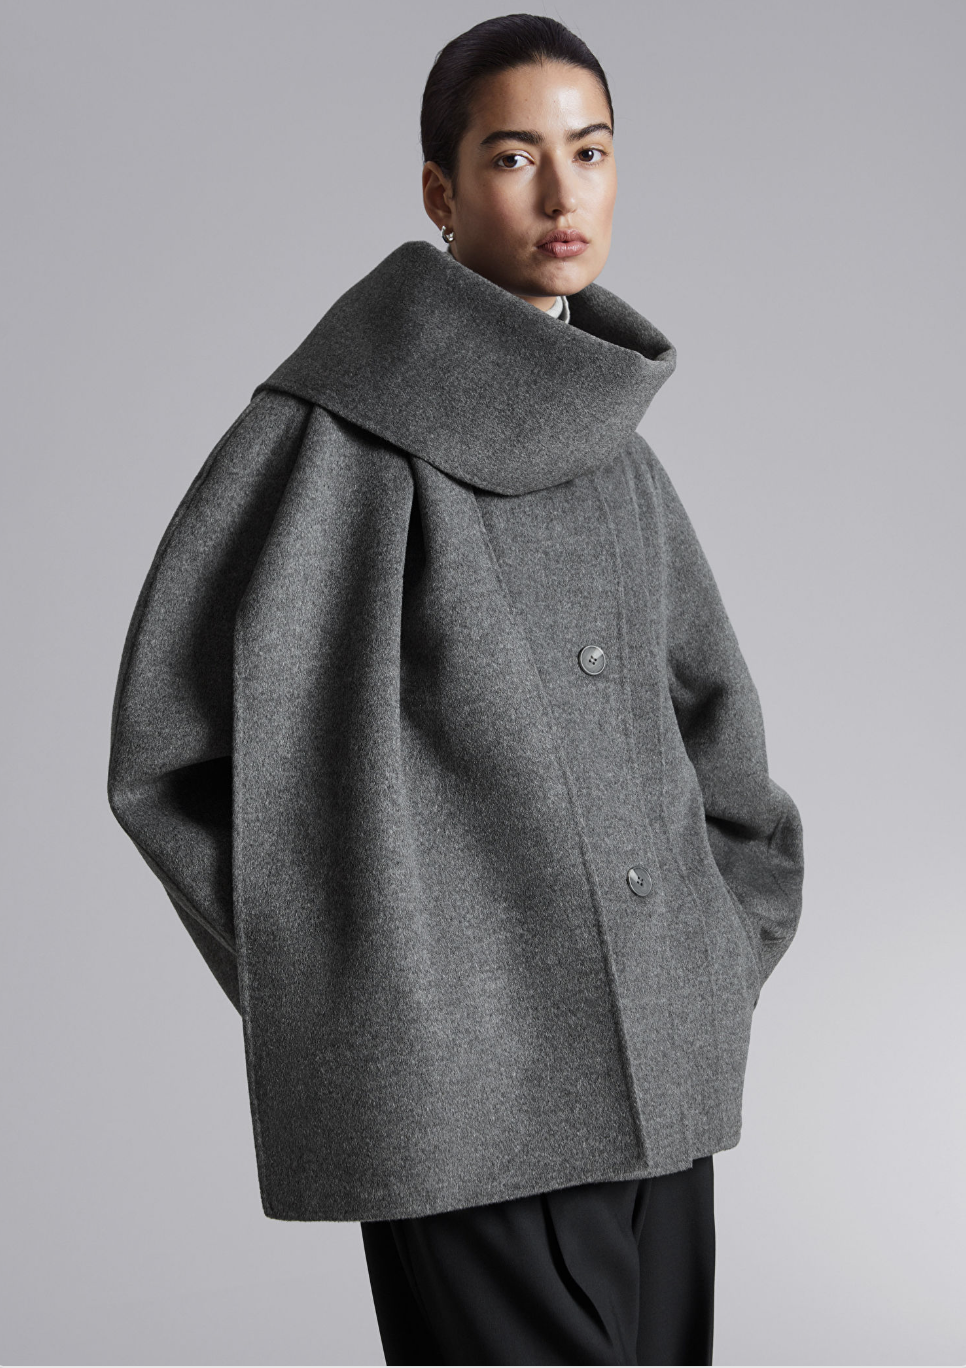 Wool Scarf Jacket, £205